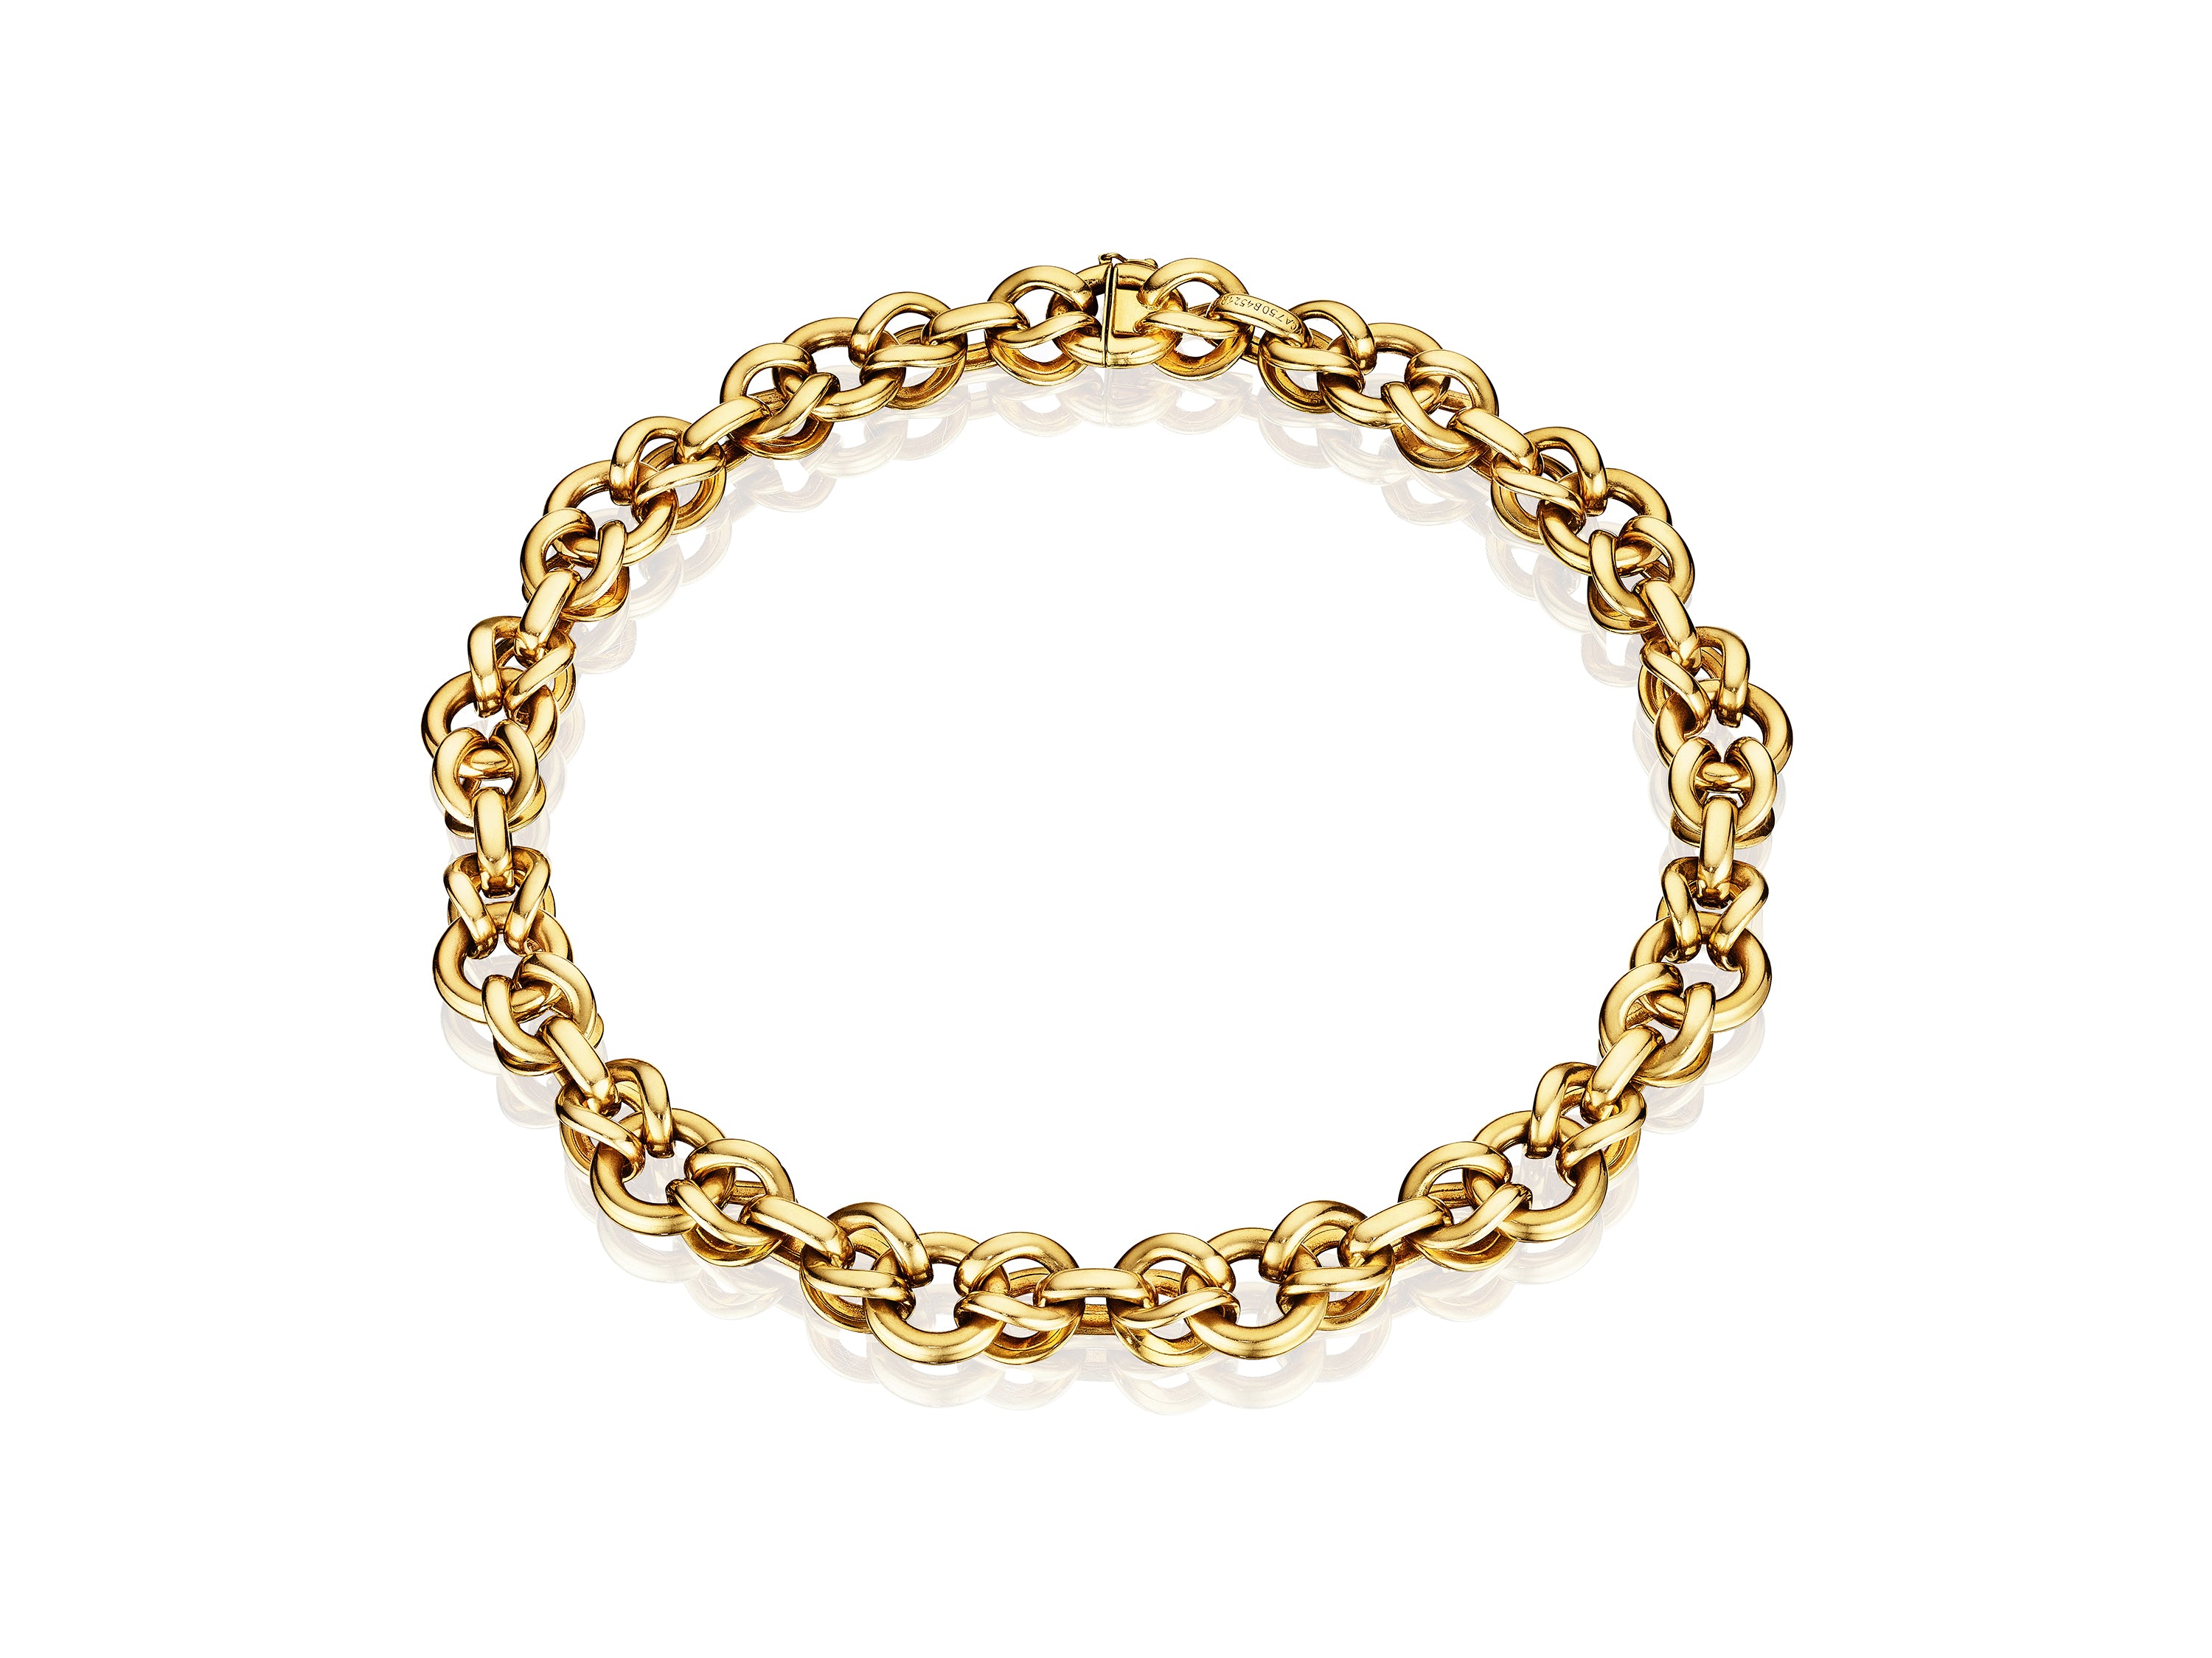 Gold Link Necklace by Van Cleef & Arpels, Paris, circa 1960